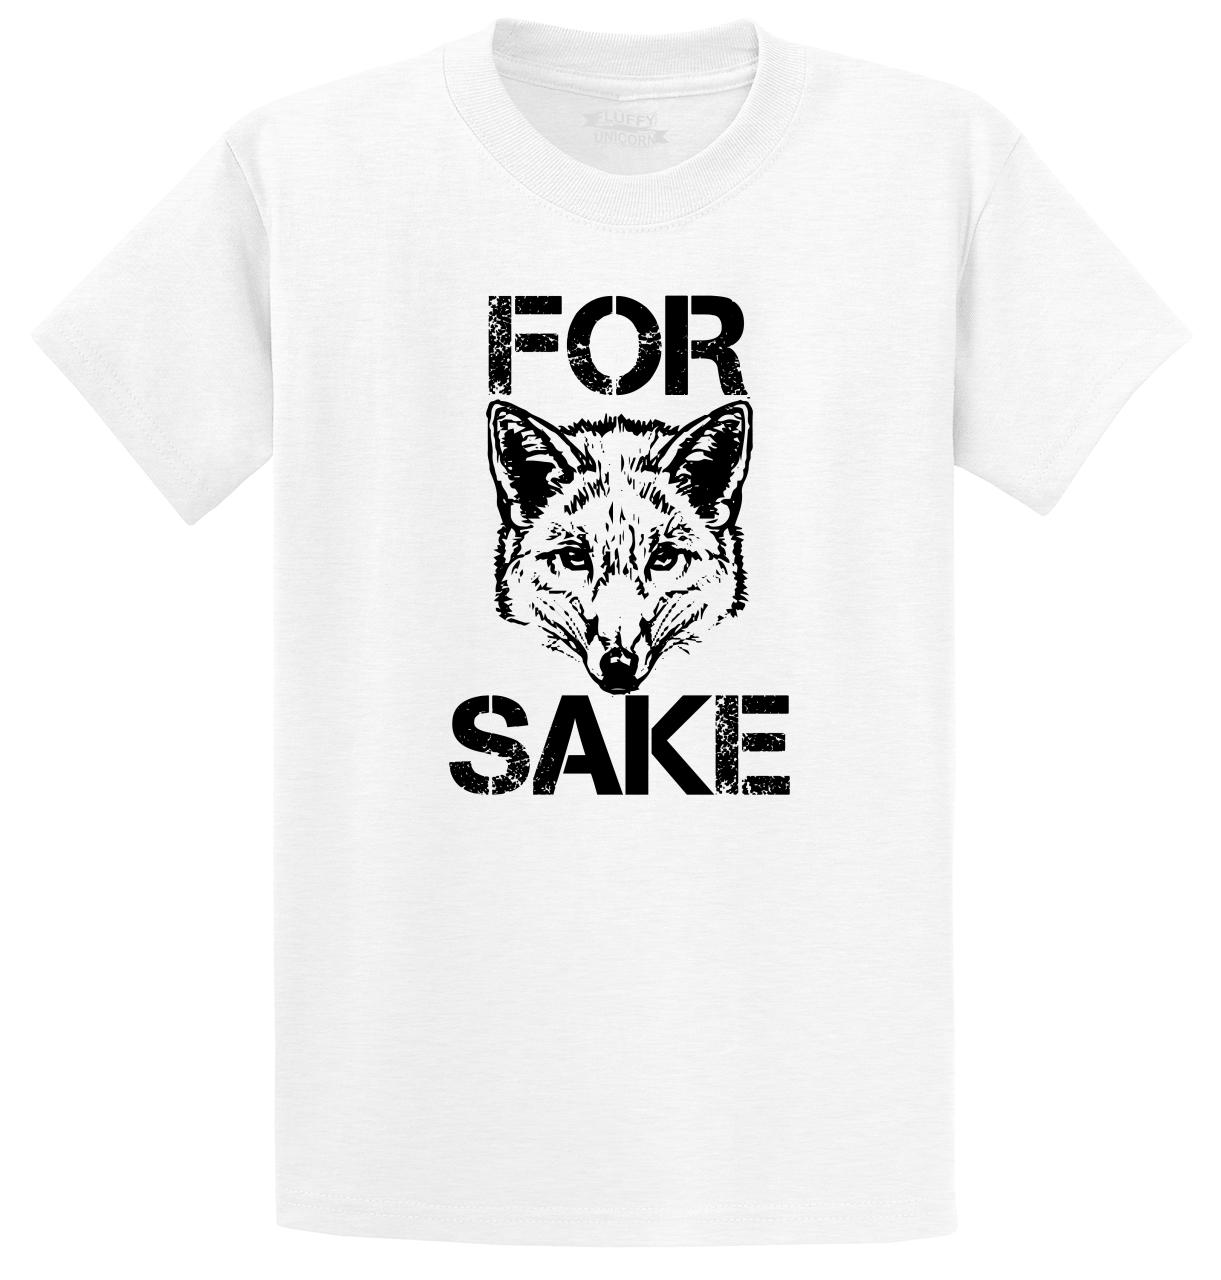 For Fox Sake Funny T Shirt WTF Adult Humor Rude Cute Animal Tee S-5XL